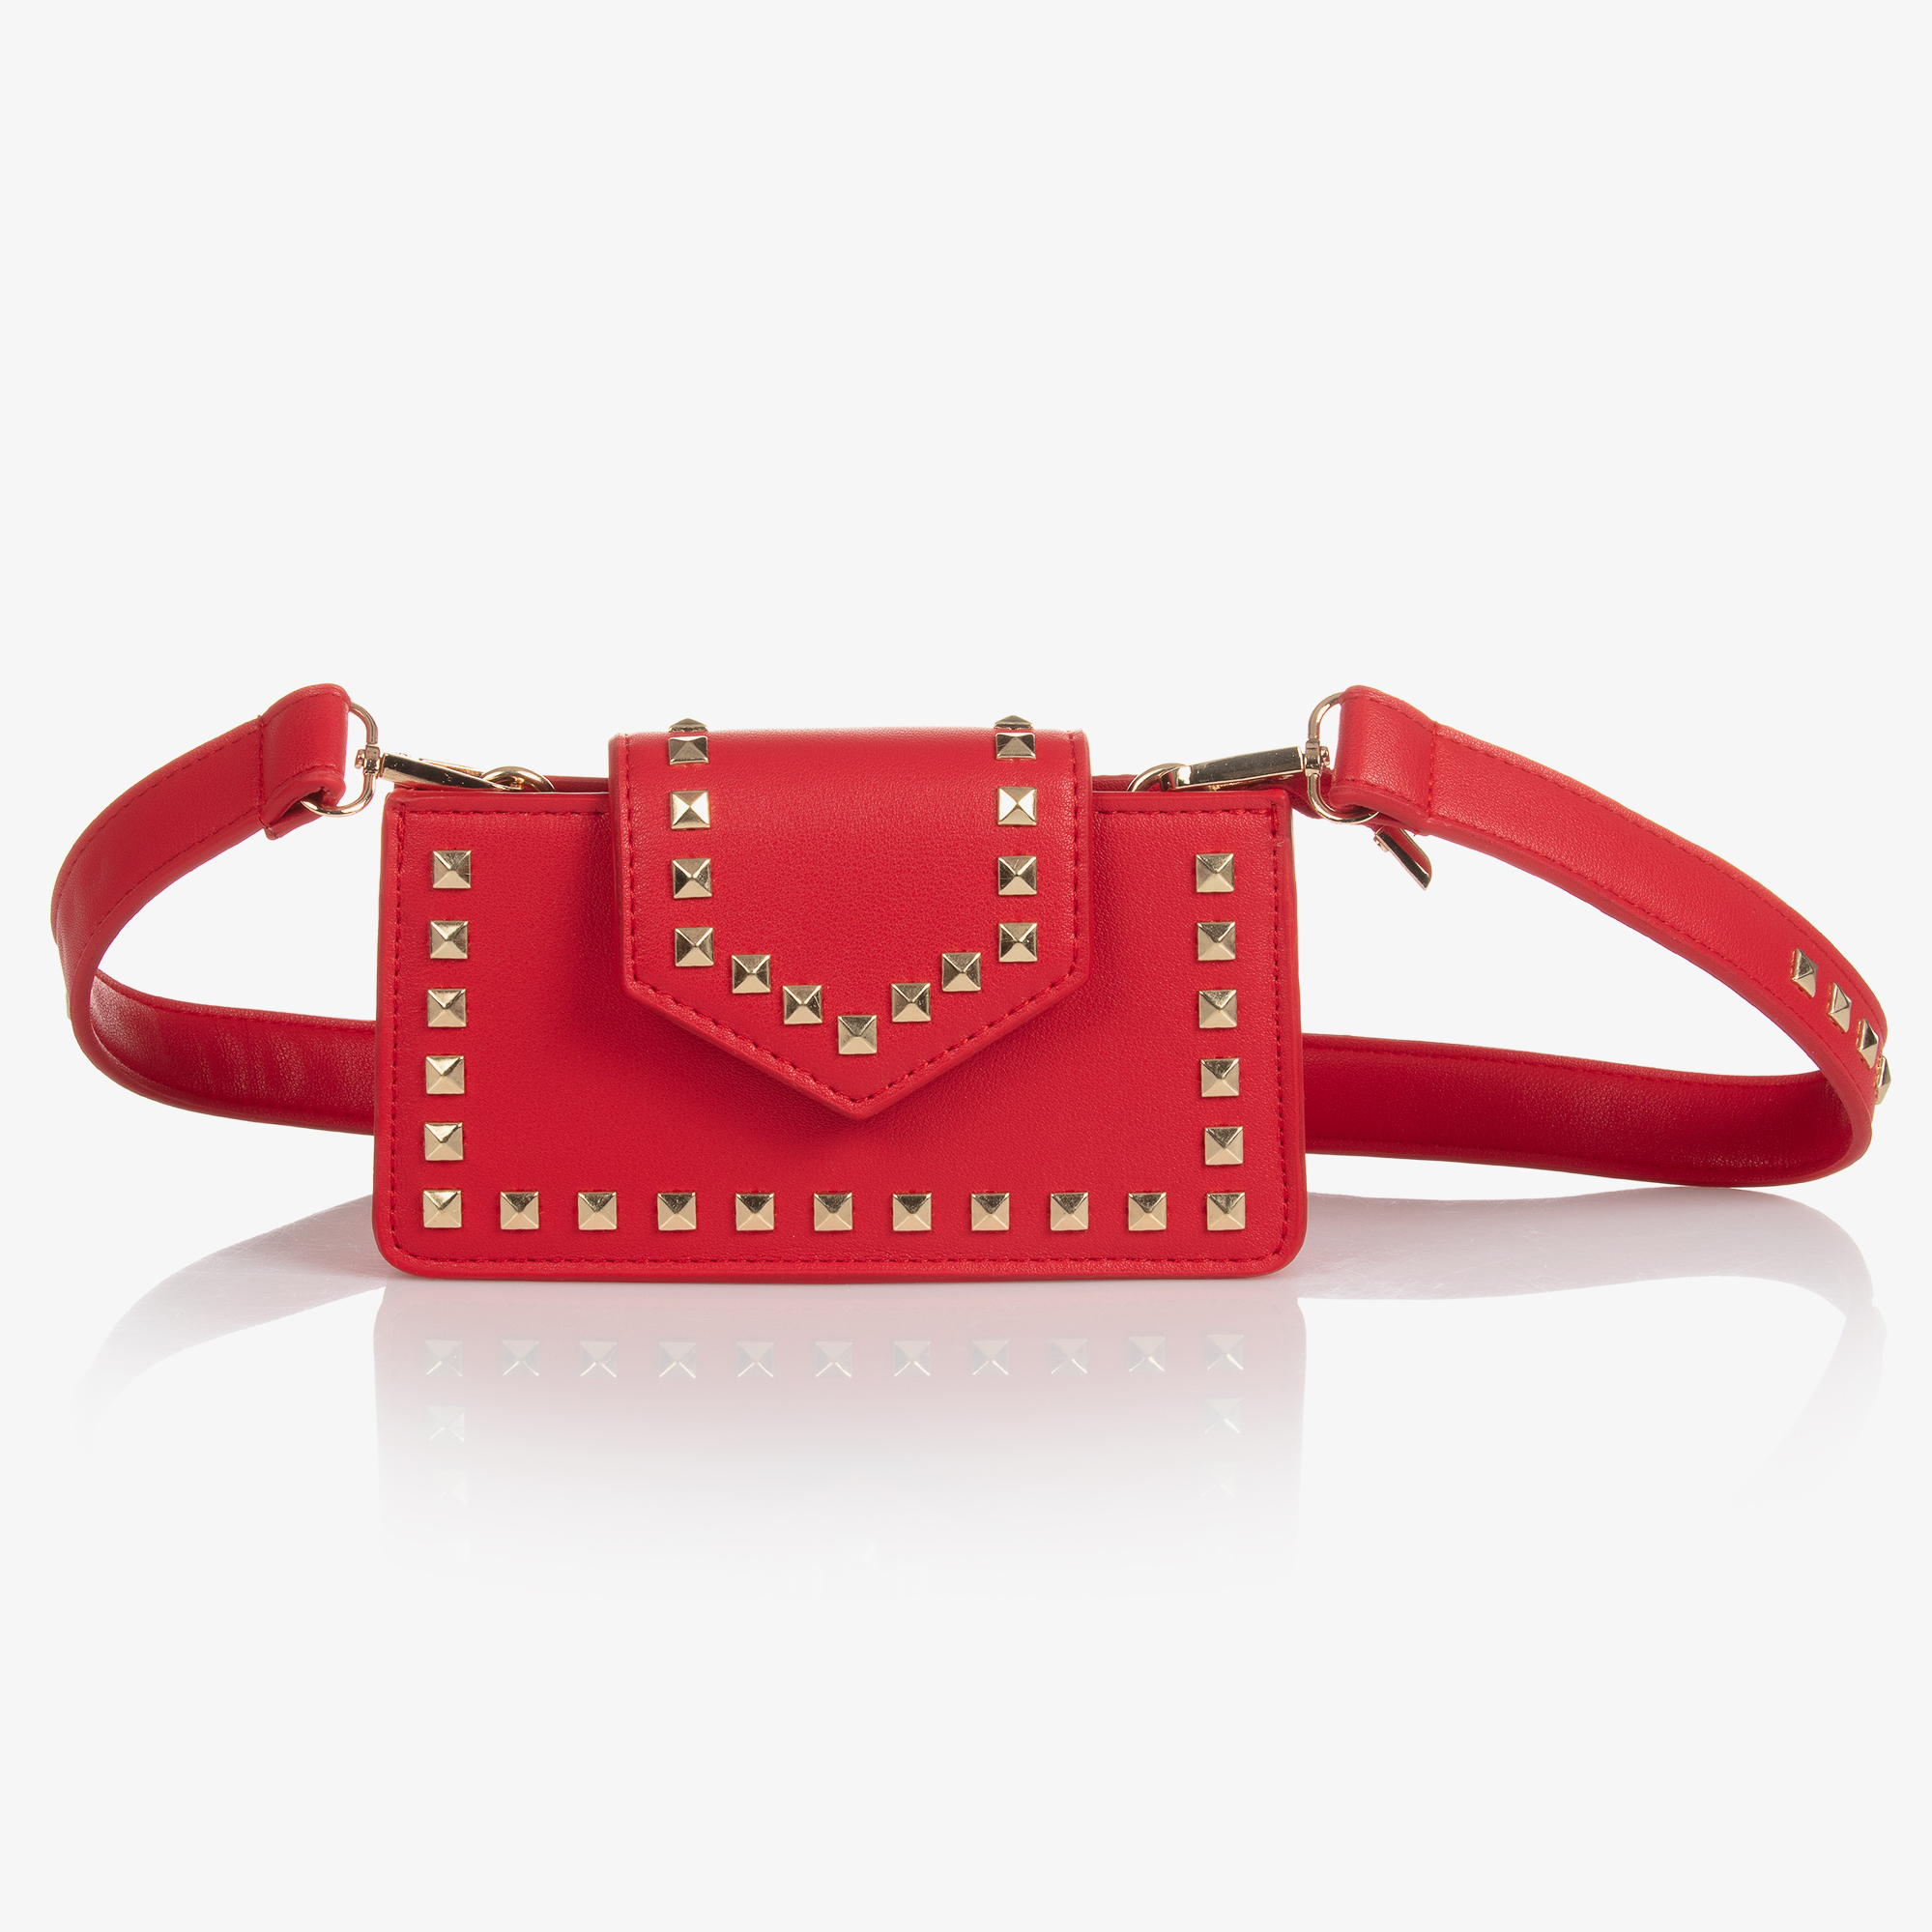 Buy Lavie Red Studded Shoulder Bag - Handbags for Women 982230 | Myntra